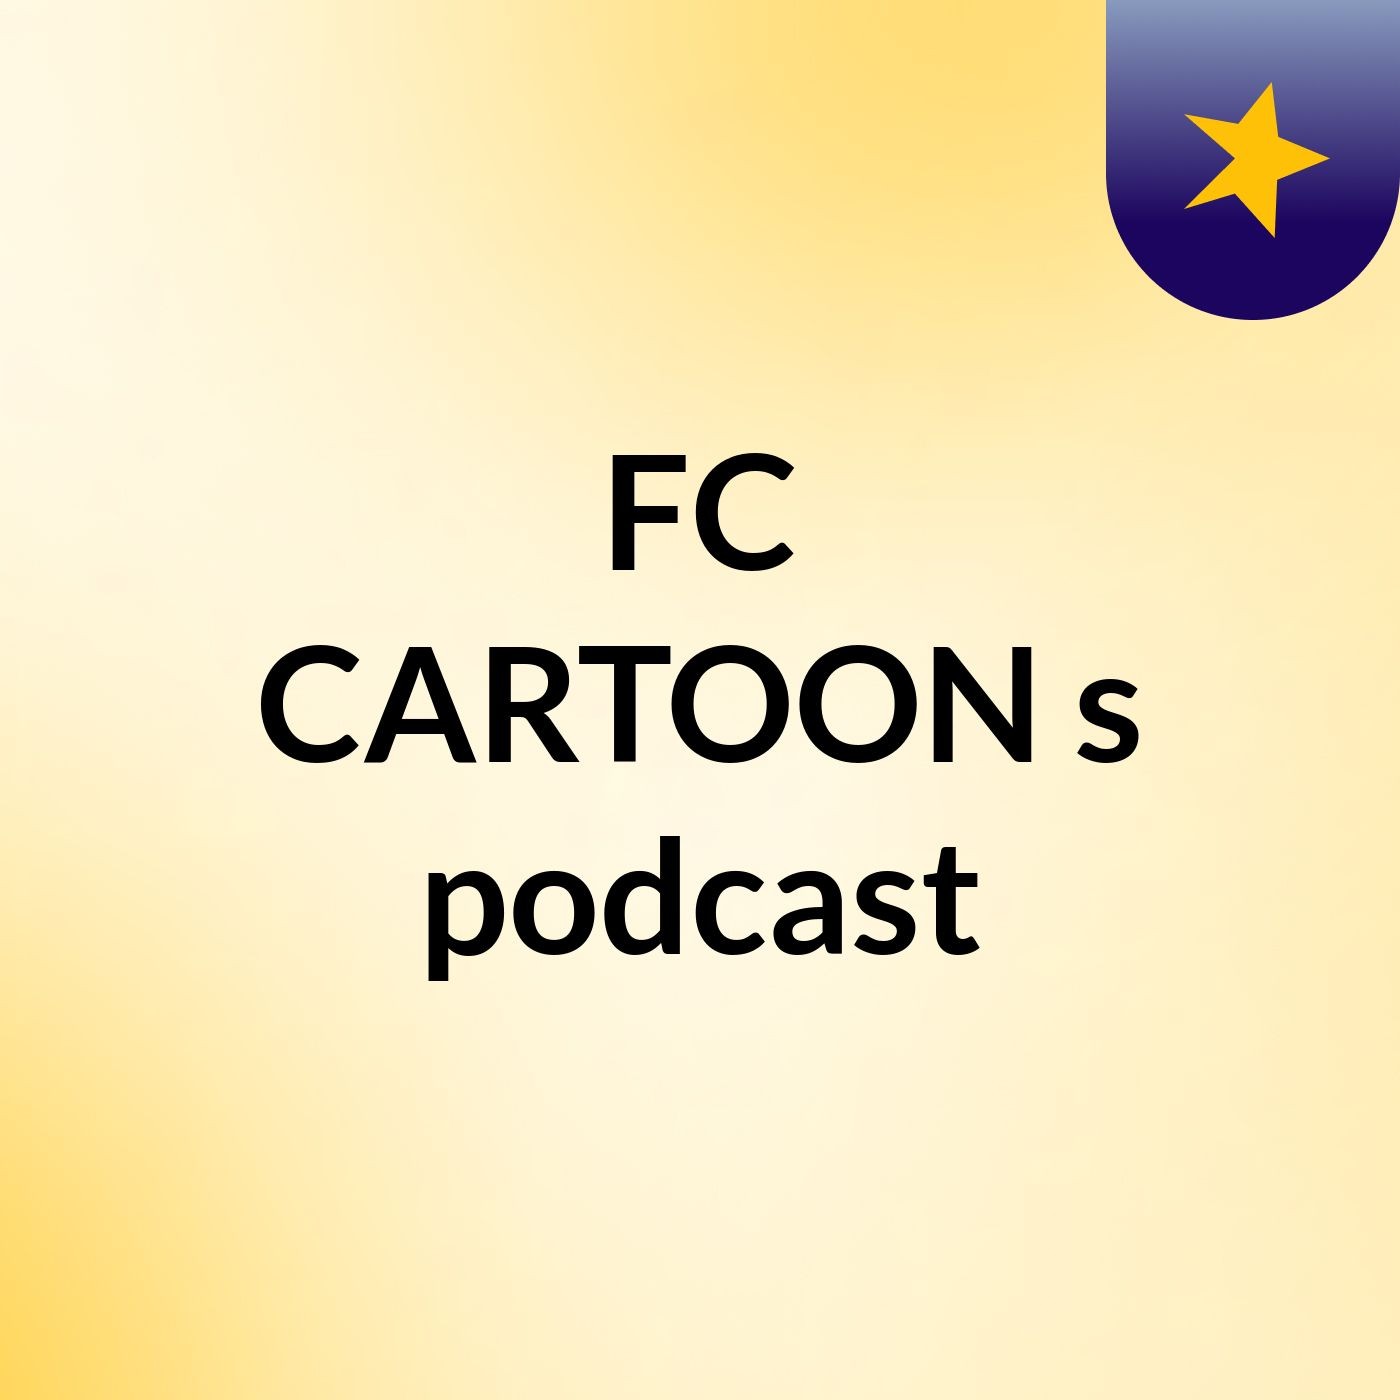 Episode 2 - FC CARTOON's podcast